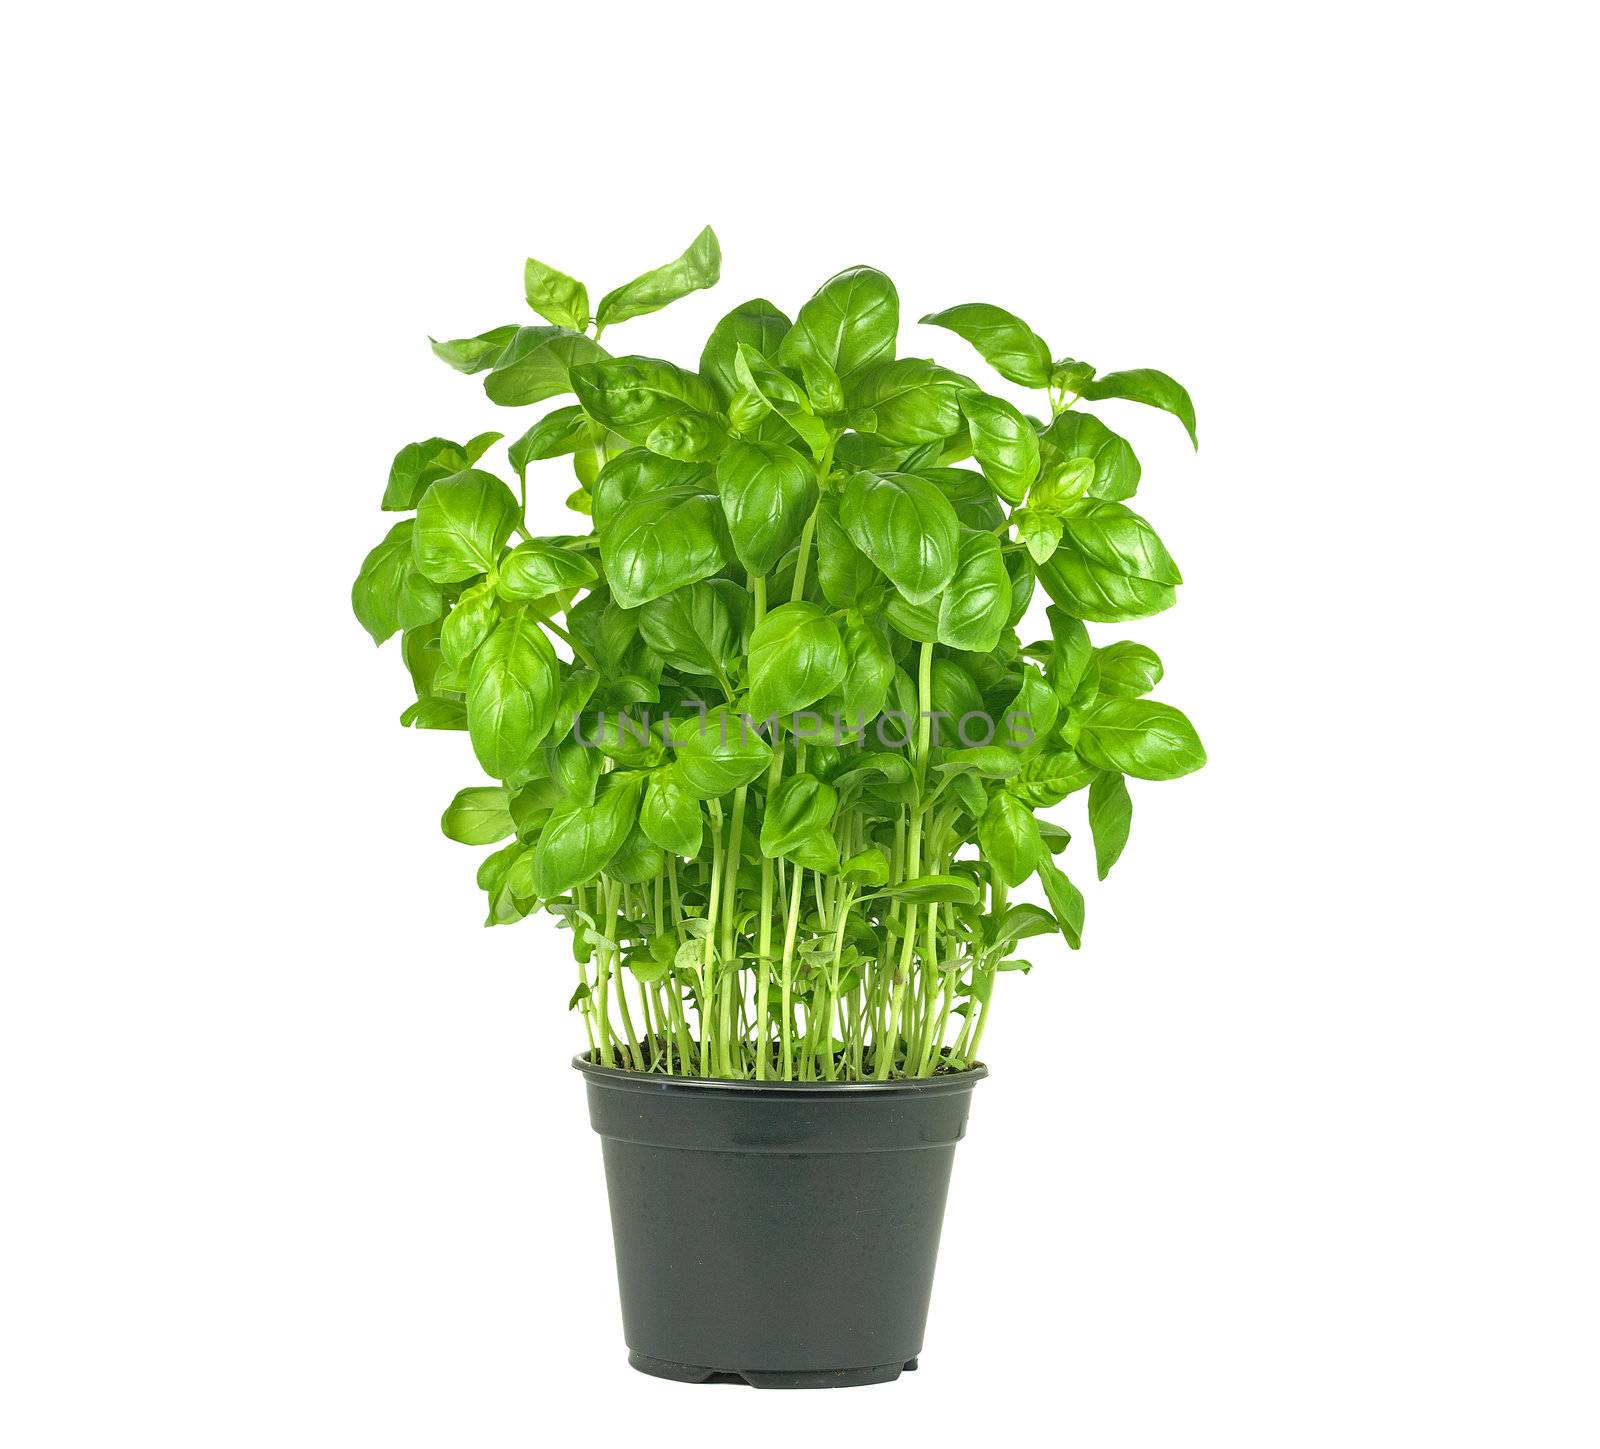 pot of fresh basil plant on white background